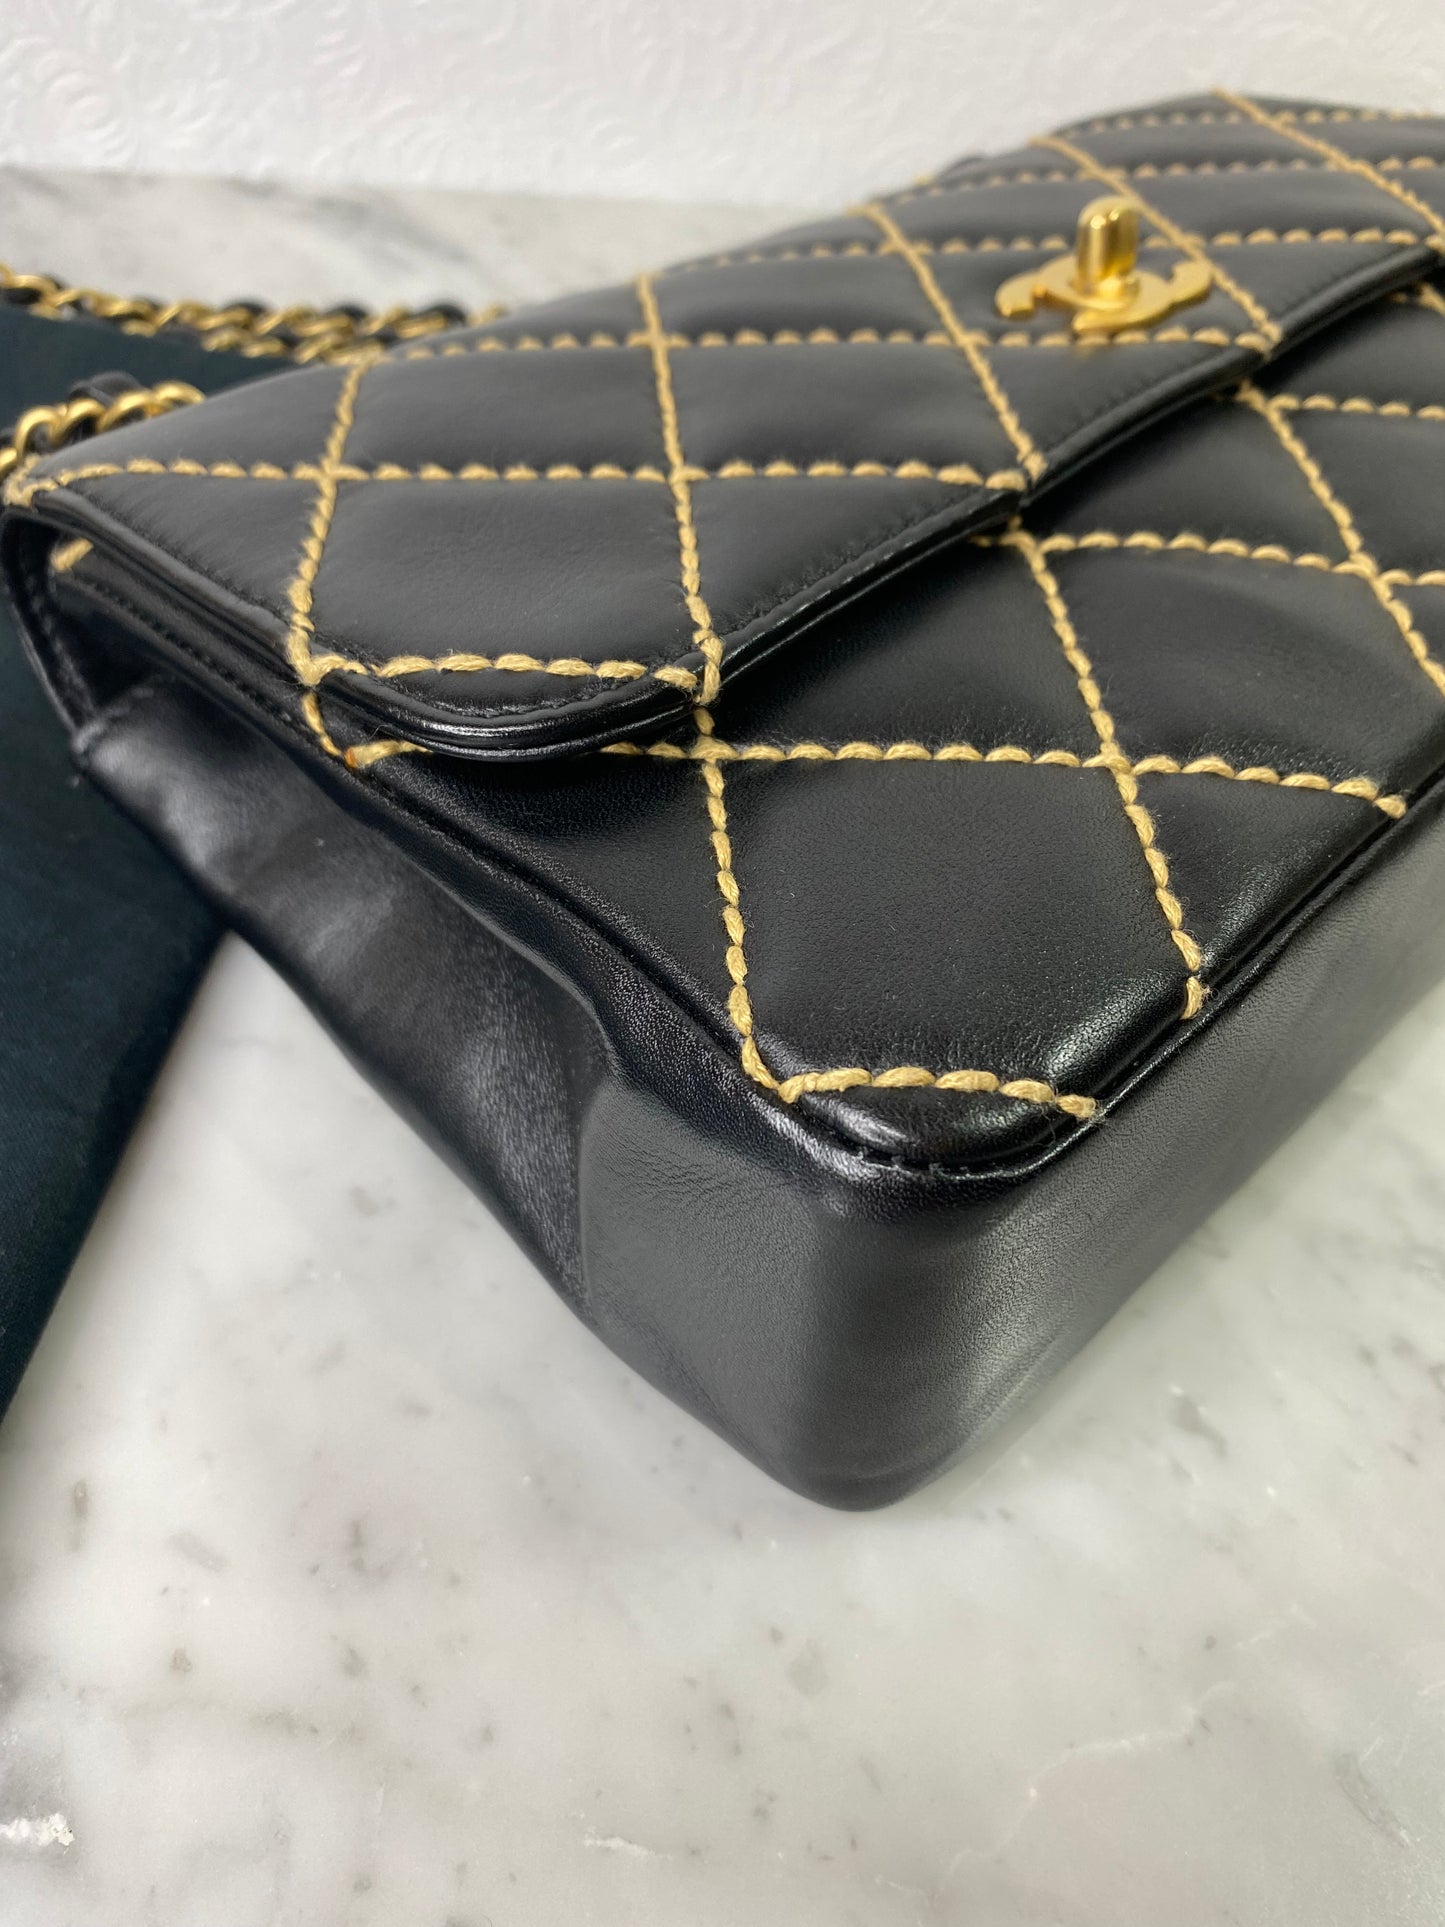 Chanel "Wild Stitch" Flap Bag Calfskin Black GHW - Medium